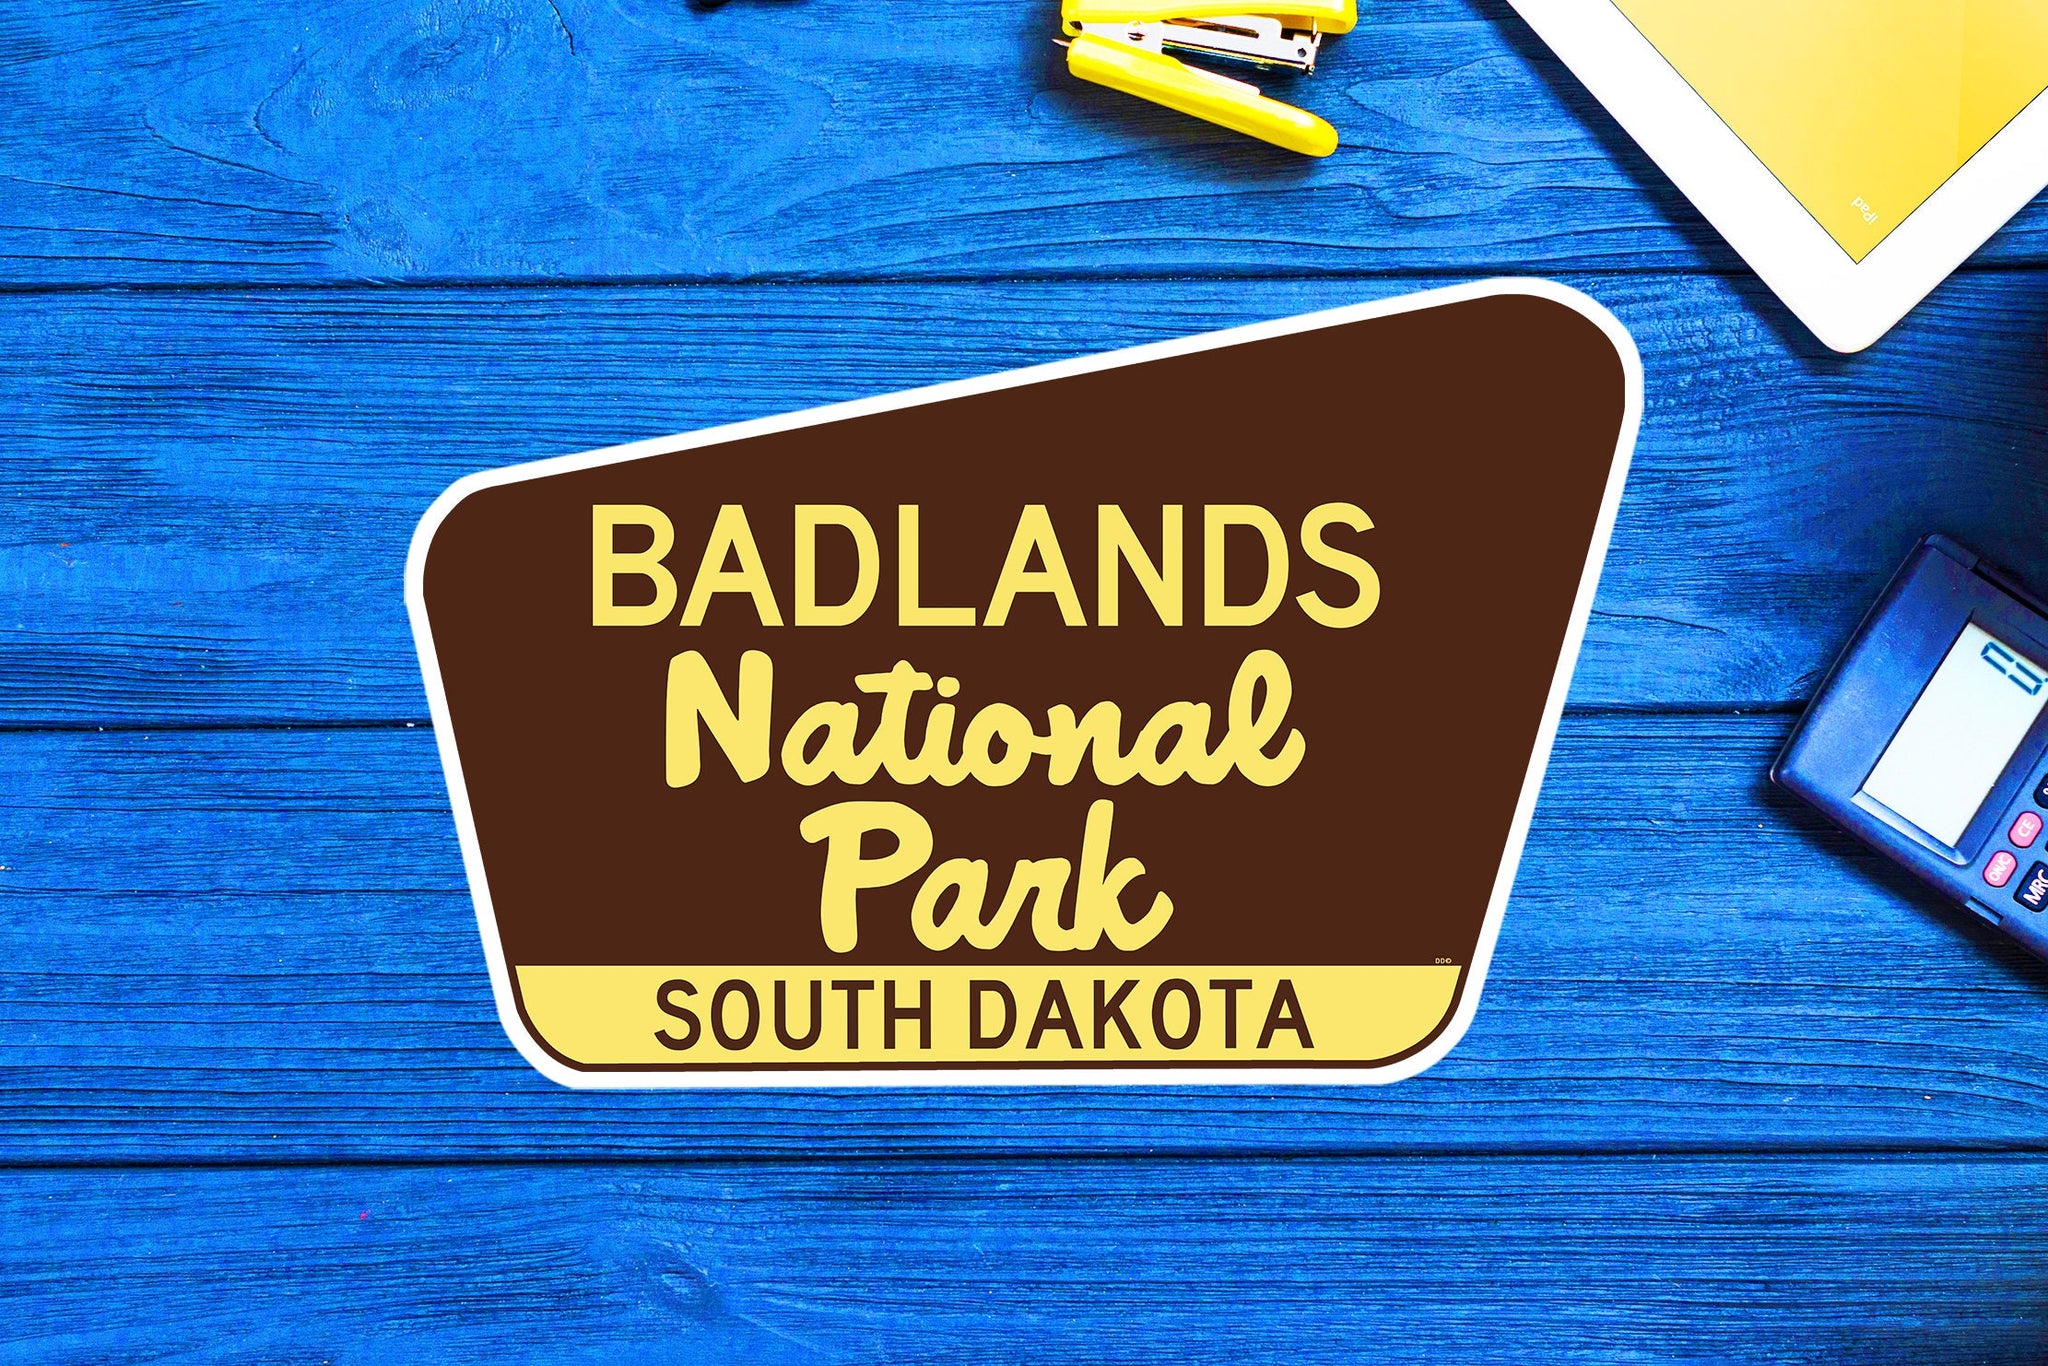 Badlands National Park South Dakota Sticker 3.75" Vinyl Decal